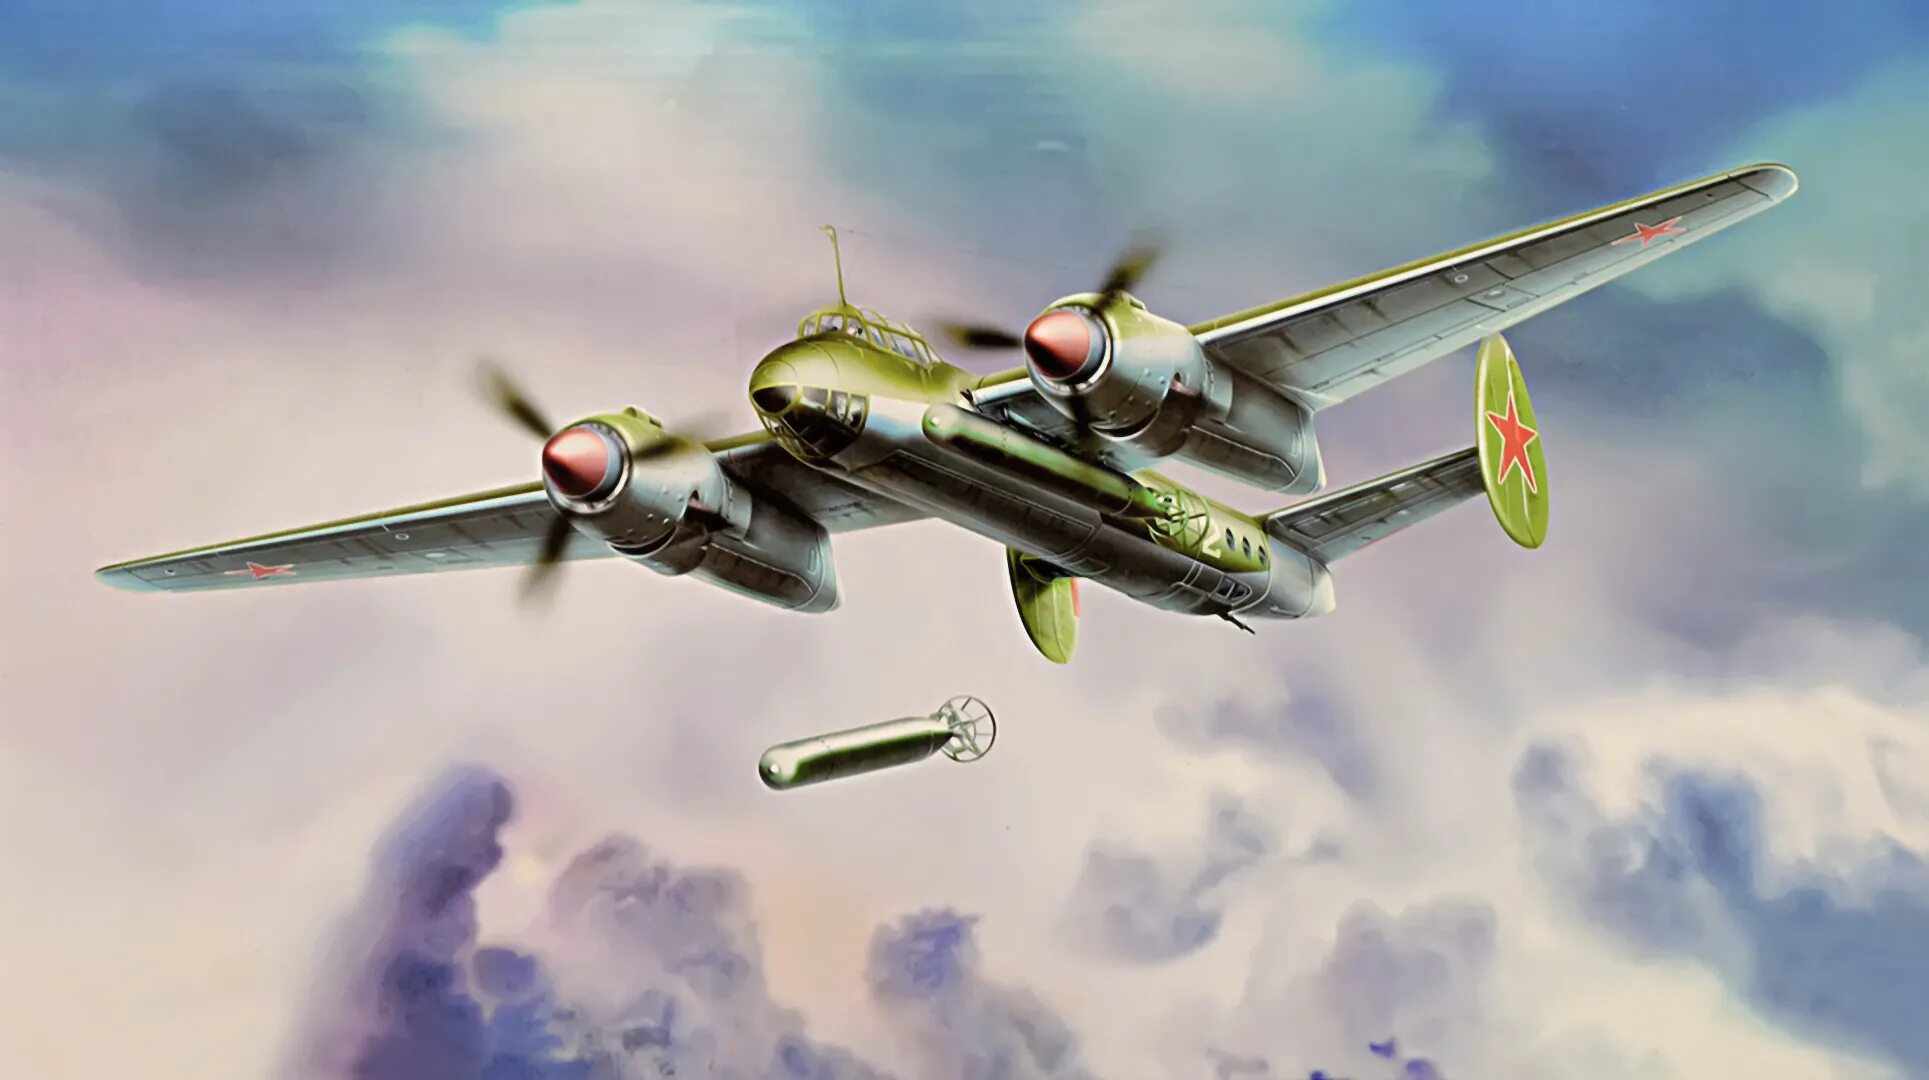 Ту 2 1 72. B48002 Xuntong model 1/48 Советский бомбардировщик-торпедоносец т-у-2с. B48003 1/48 торпедоносец ту-2т. Ту-2 от Xuntong model. Ту-2 торпедоносец 1:48.